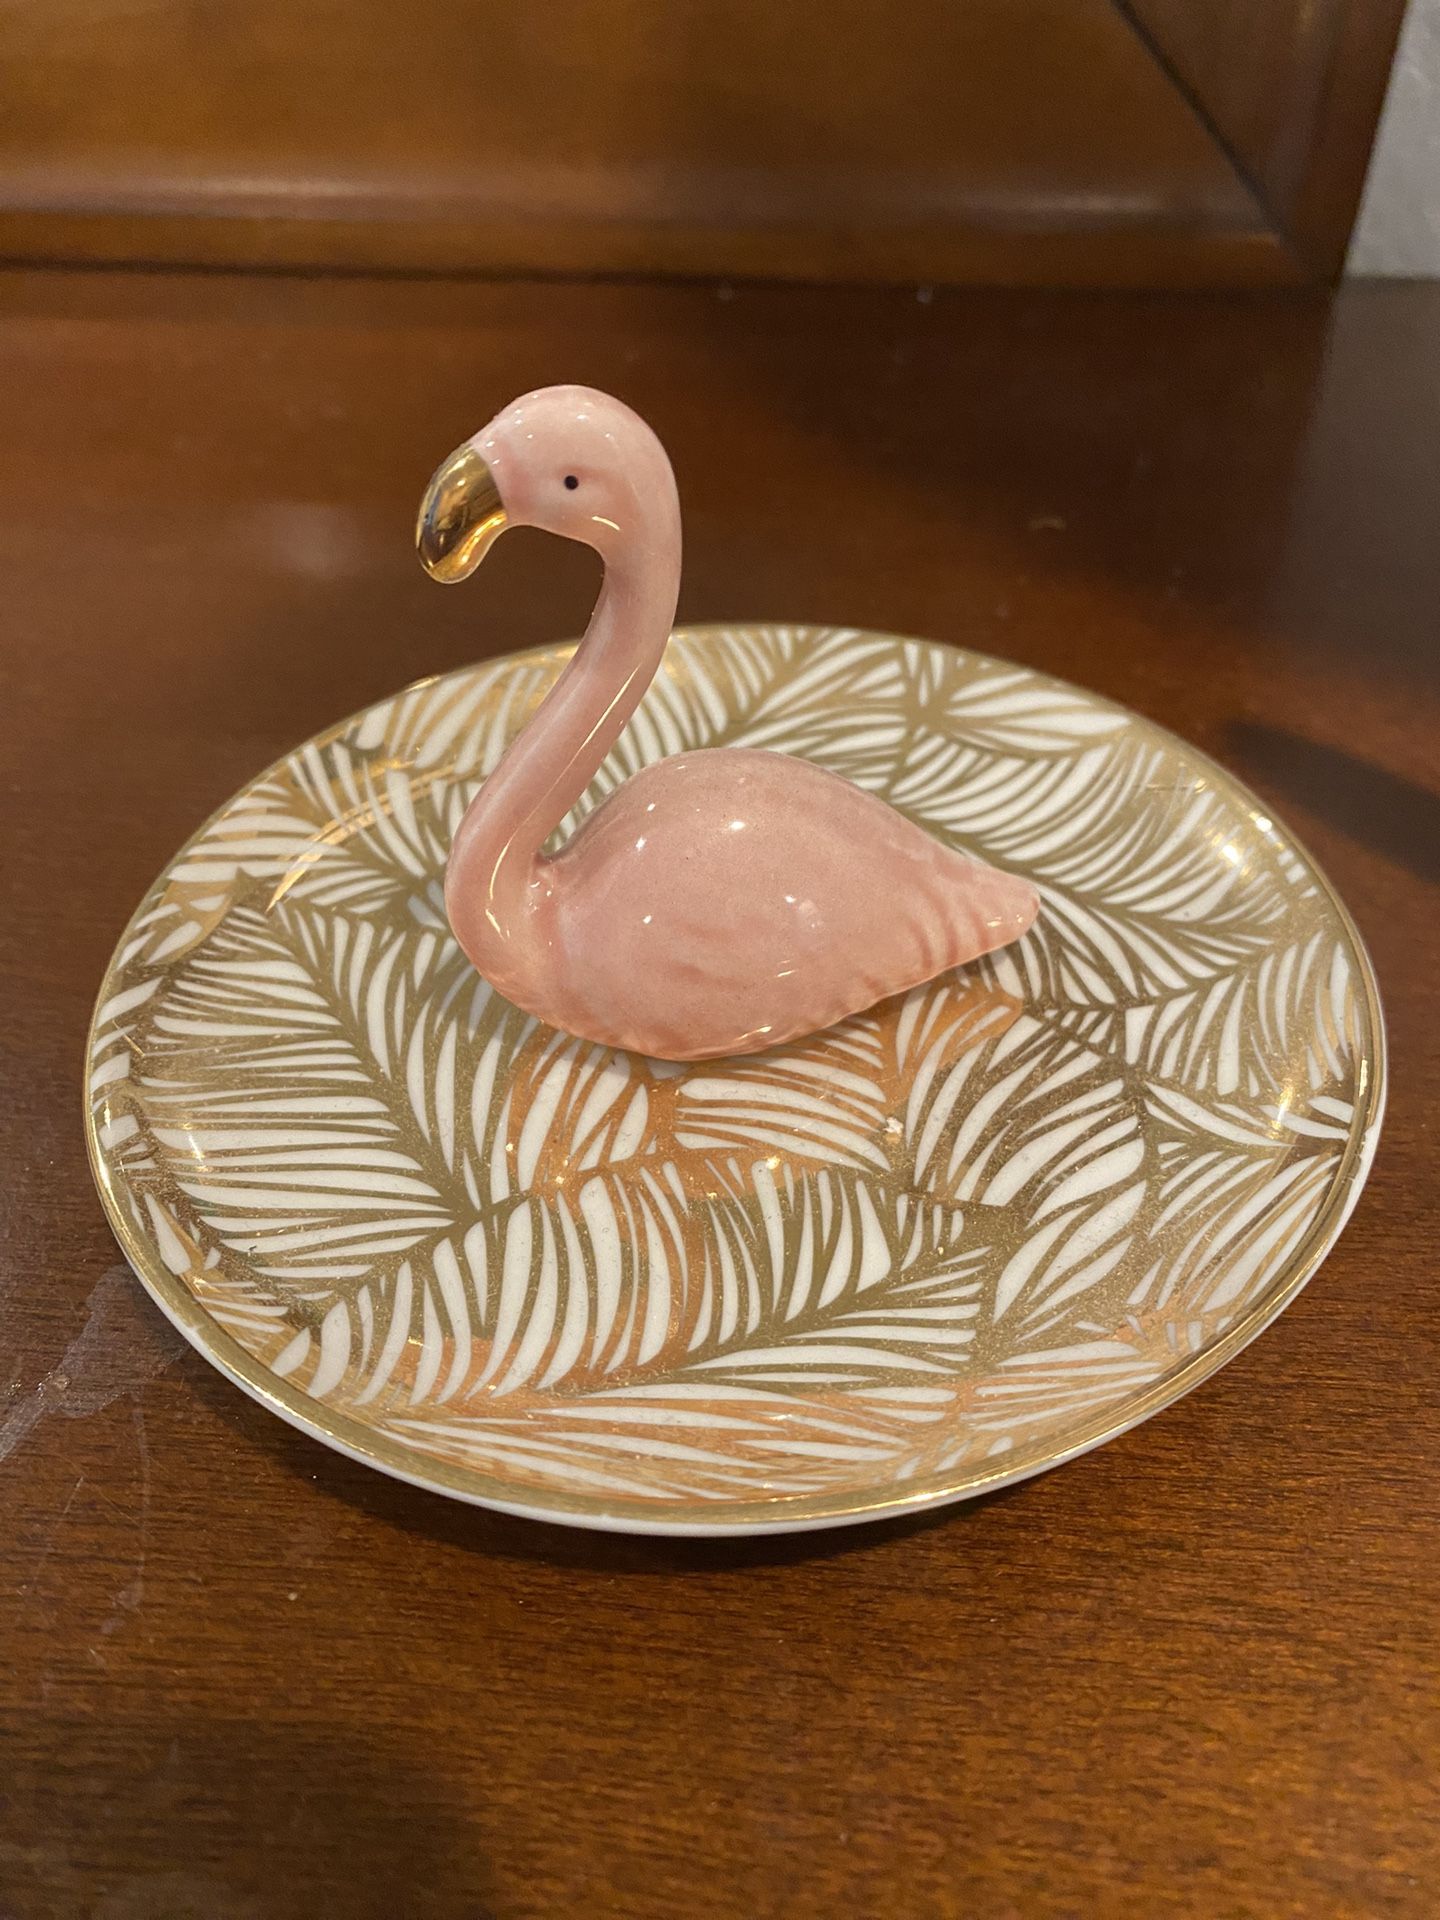 Small flamingo ring/jewelry dish